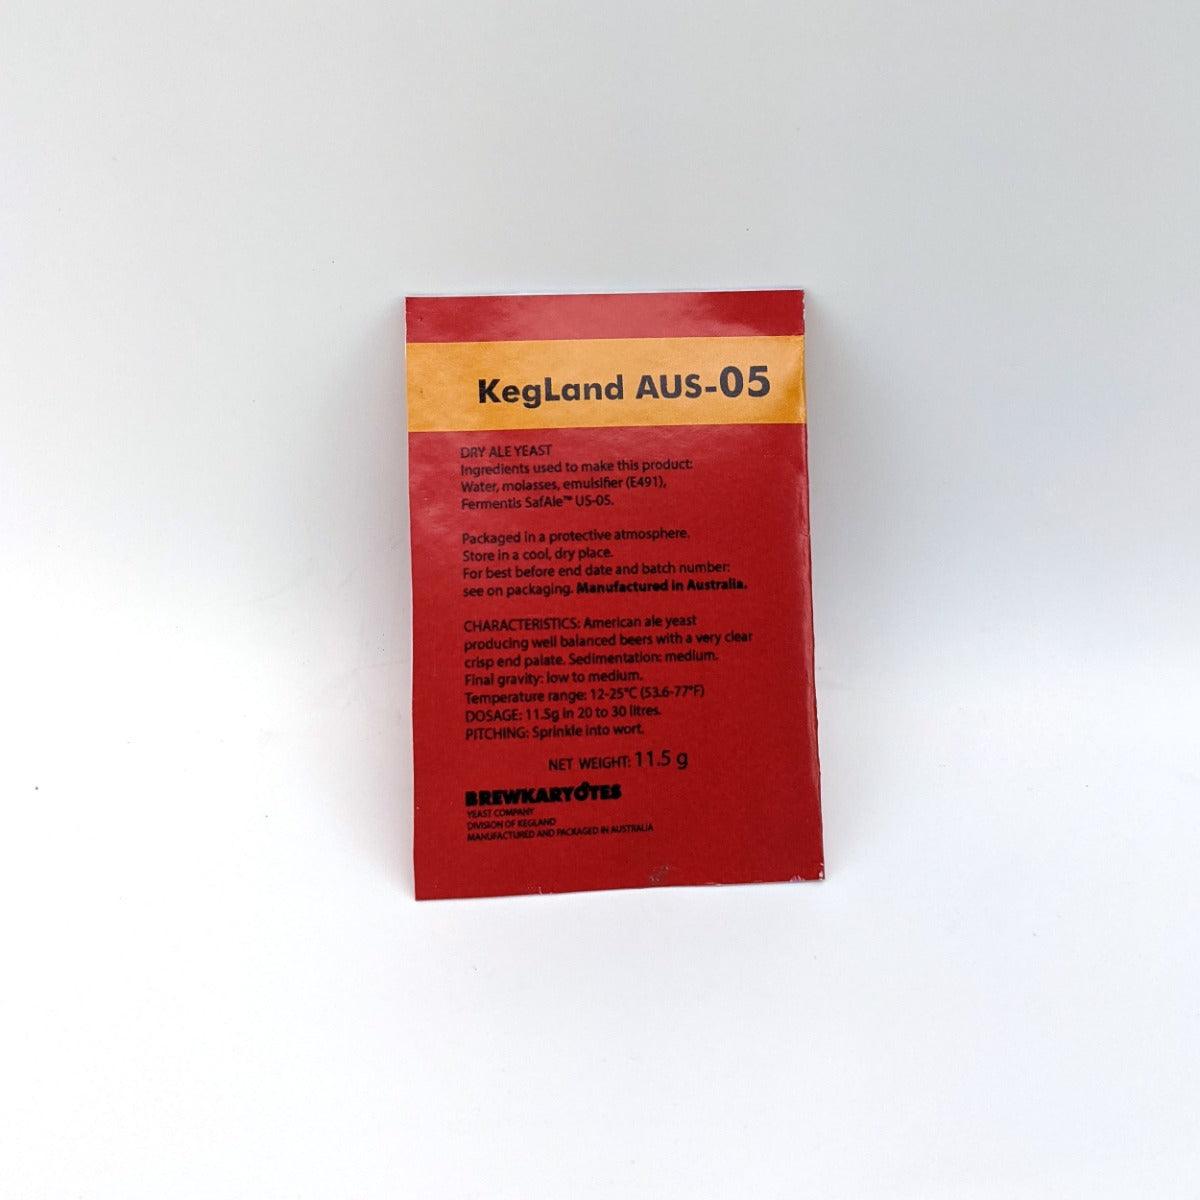 Brewkaryotes KegLand AUS-05 Yeast x 11.5g - KegLand